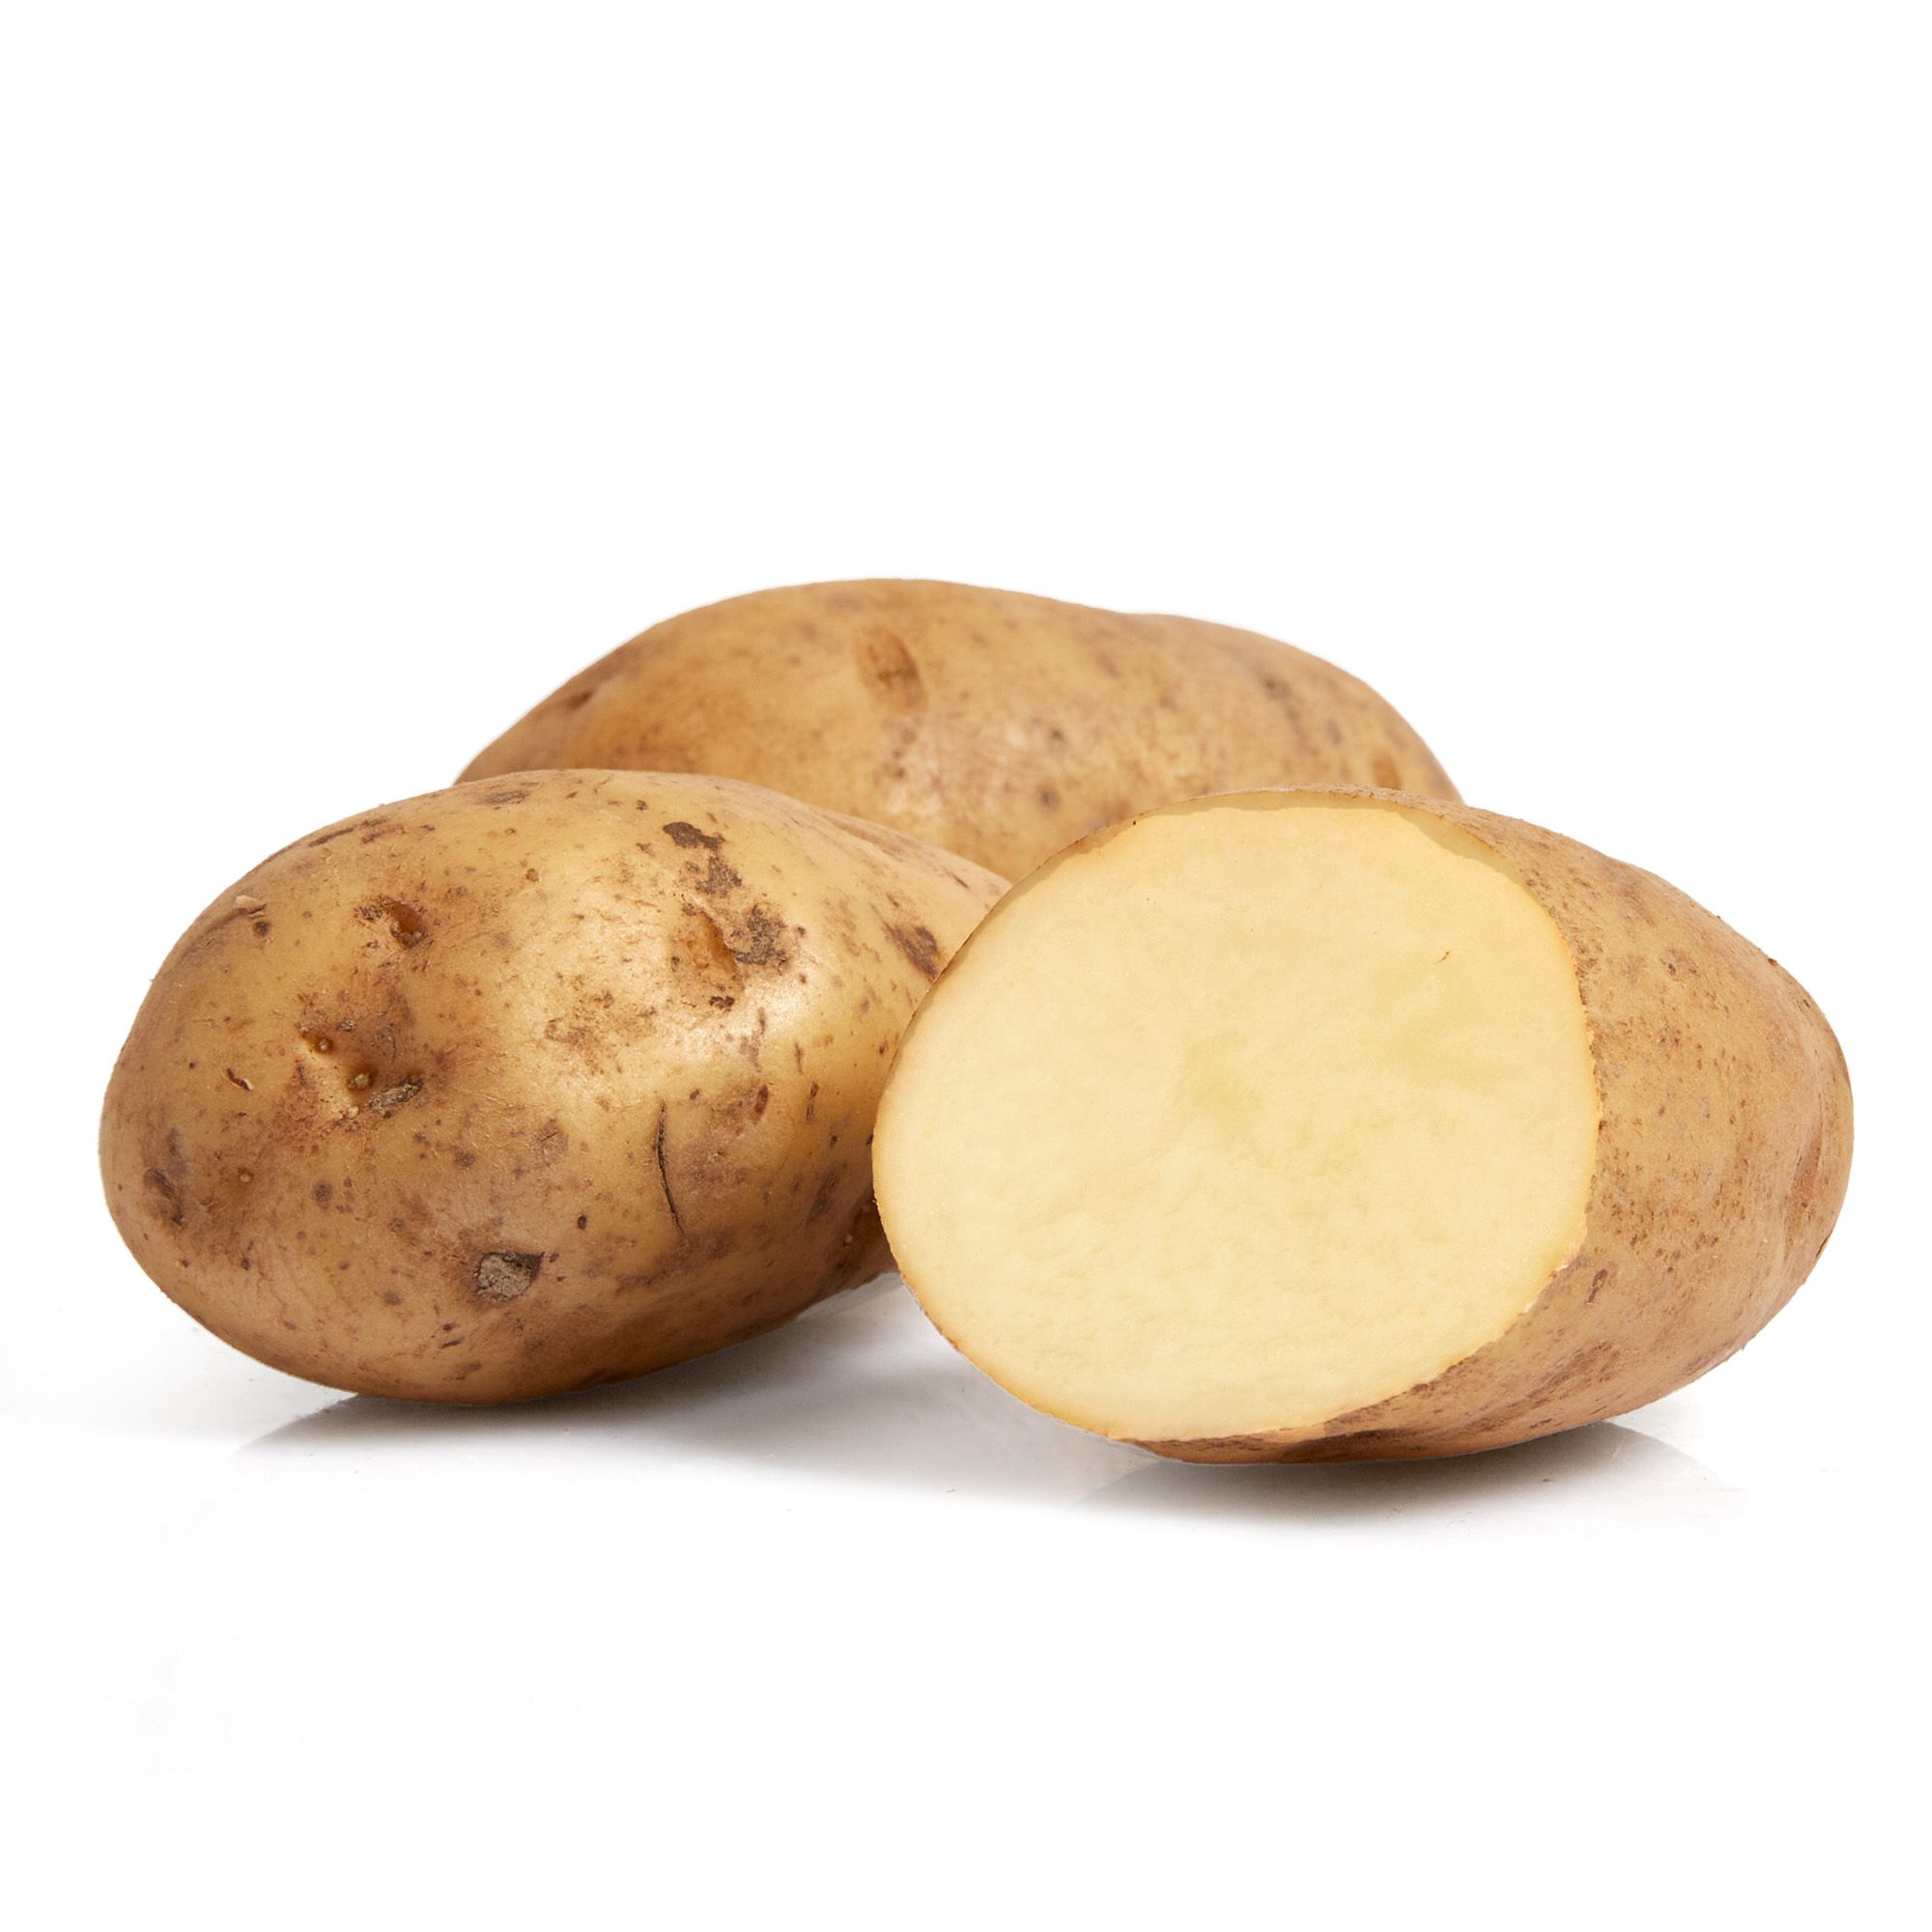 Little Potato Company Little Duos, 3 lbs.